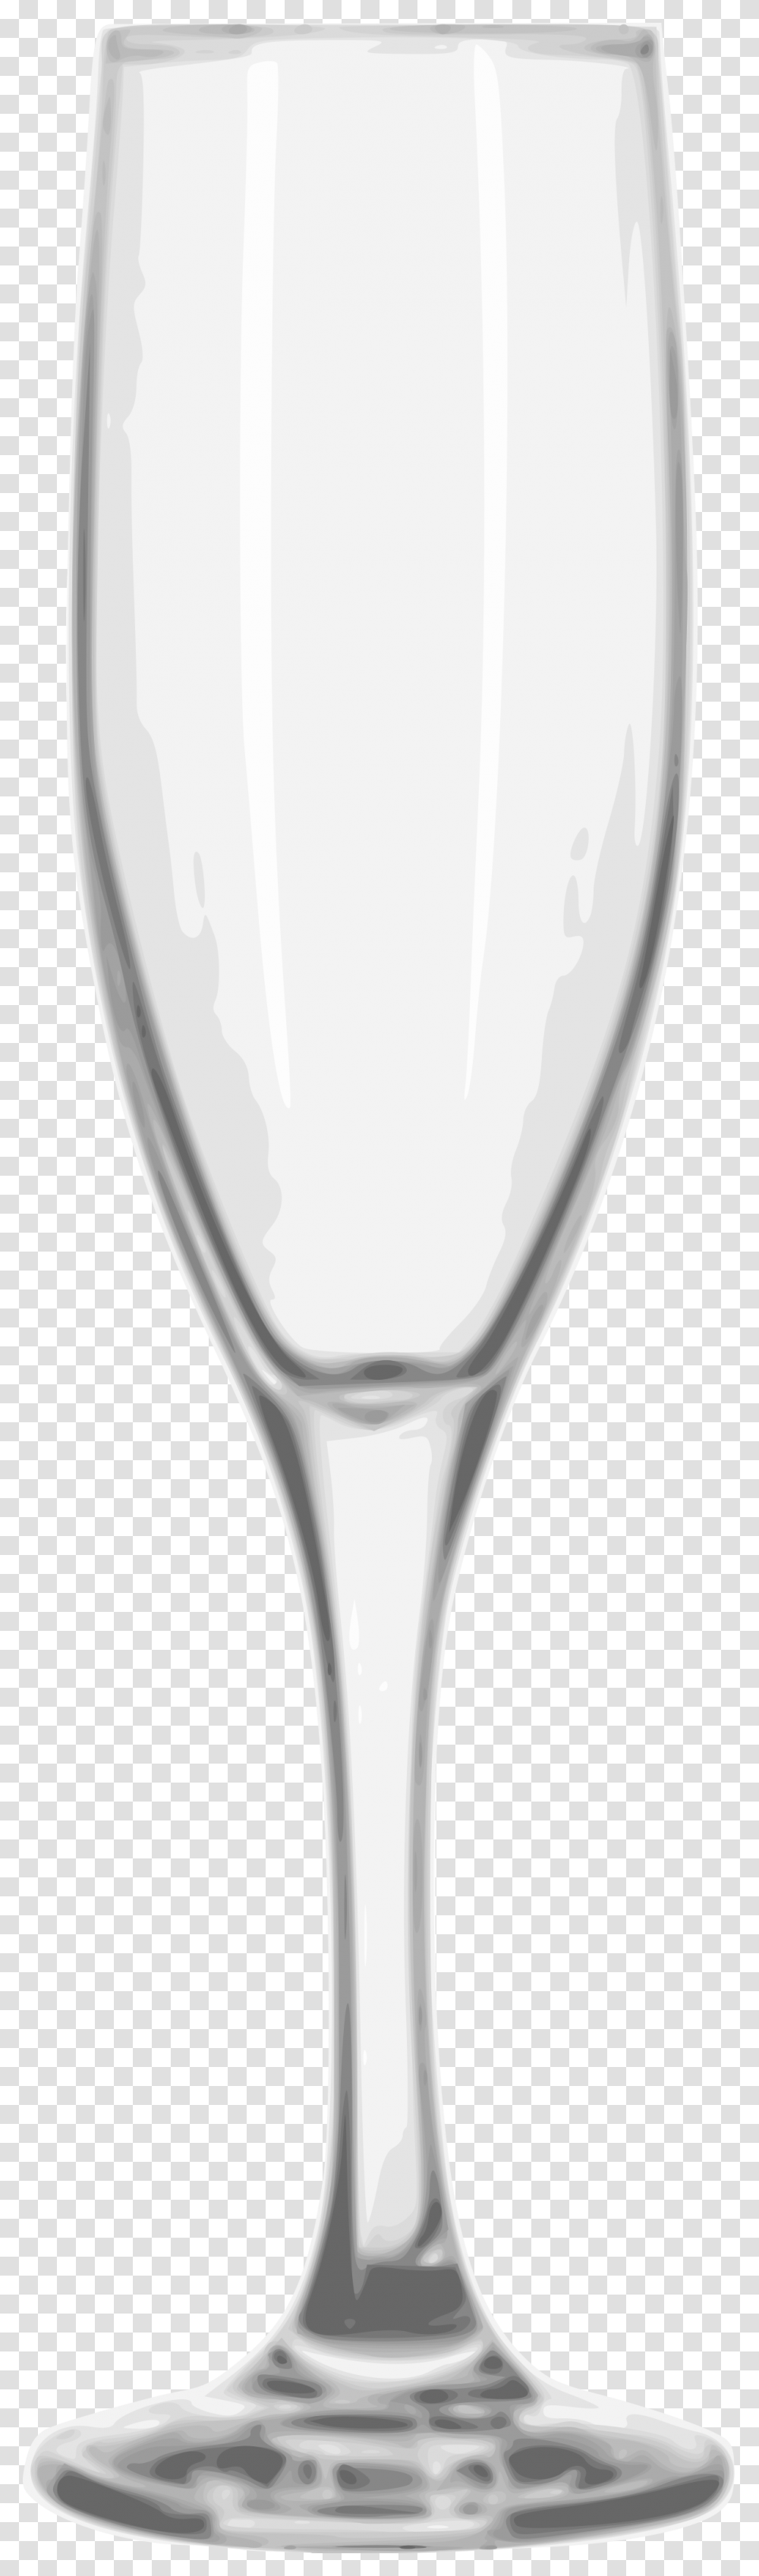 Champagne Flute Glass, Wine Glass, Alcohol, Beverage, Drink Transparent Png